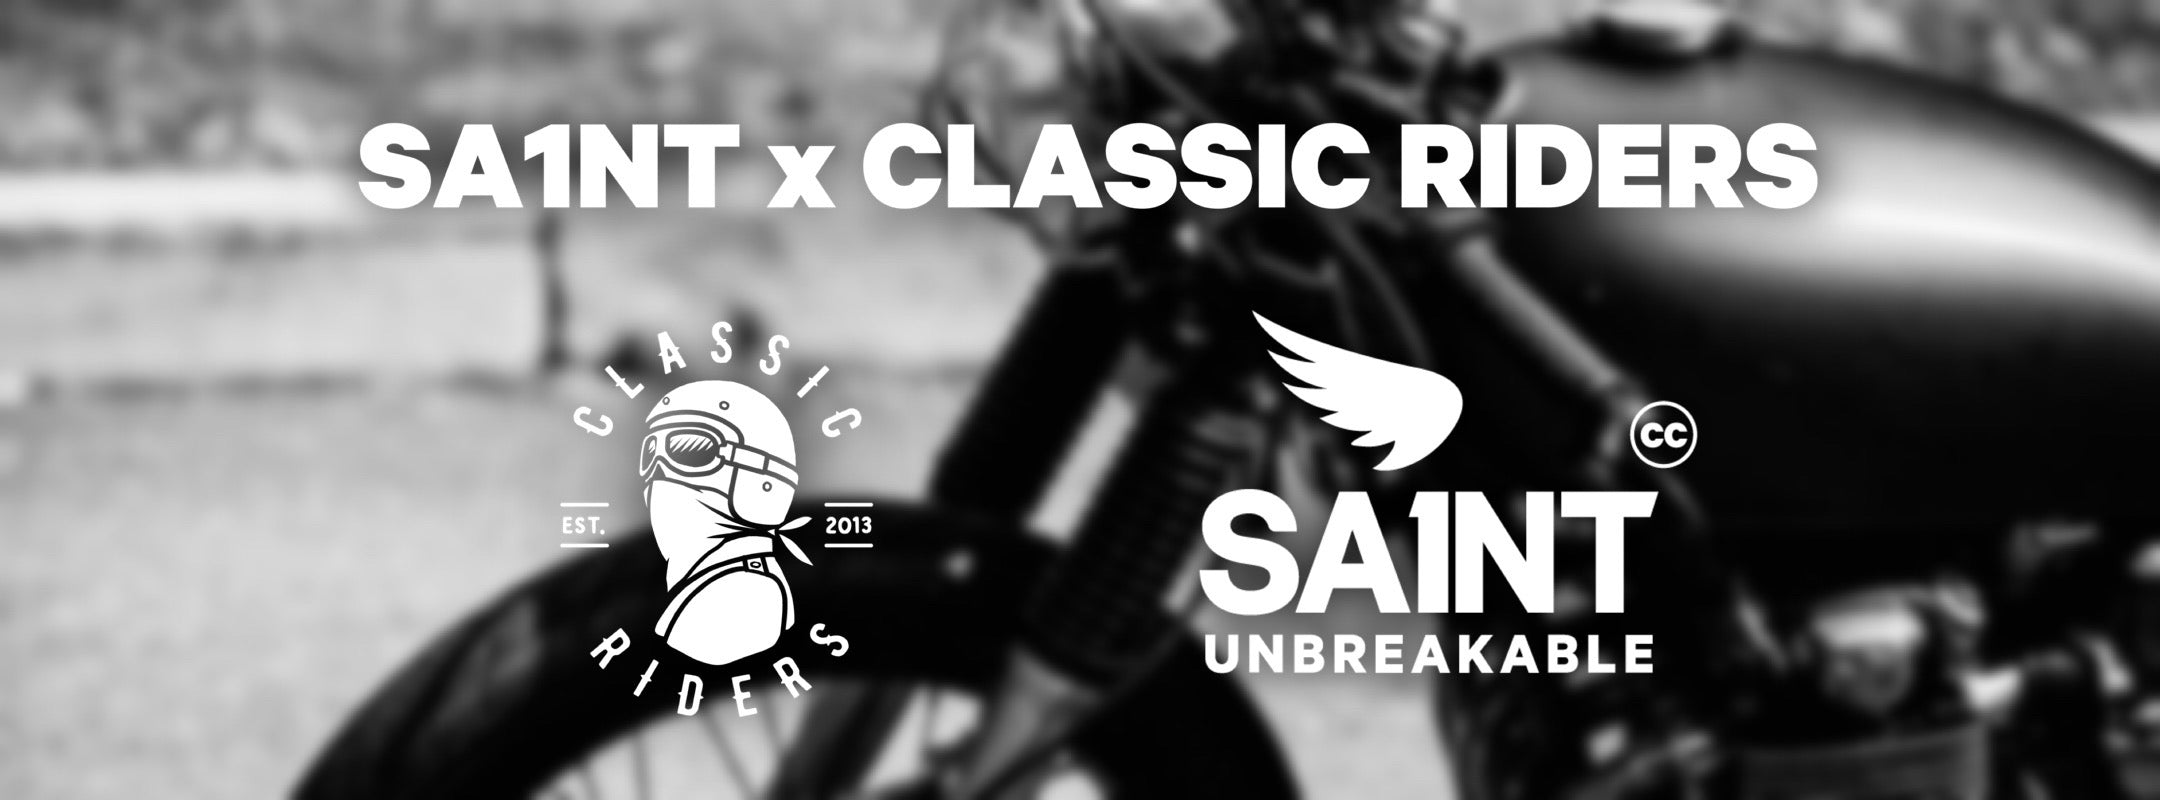 Saint and New York Classic Riders